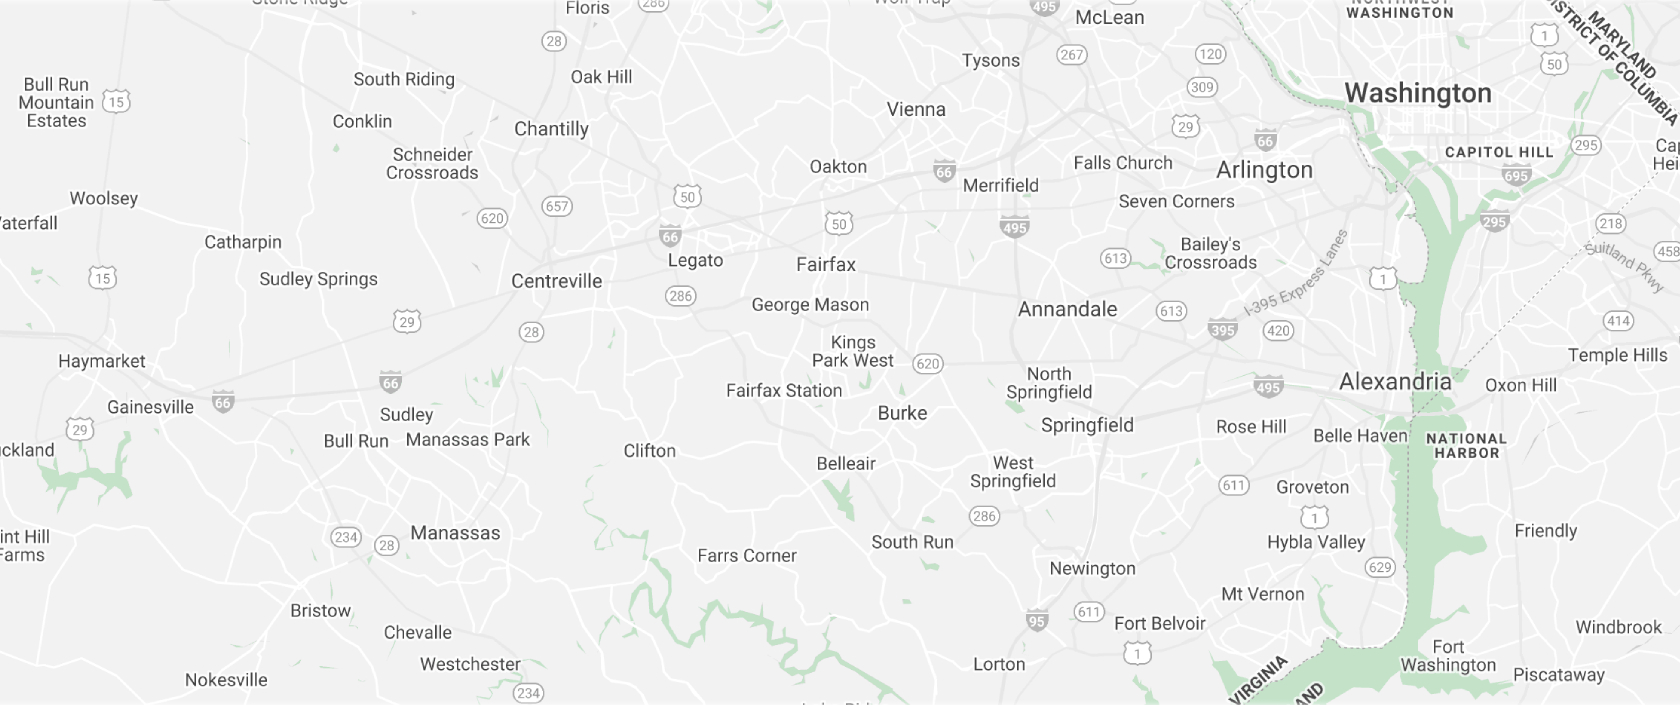 map of washington metro area.